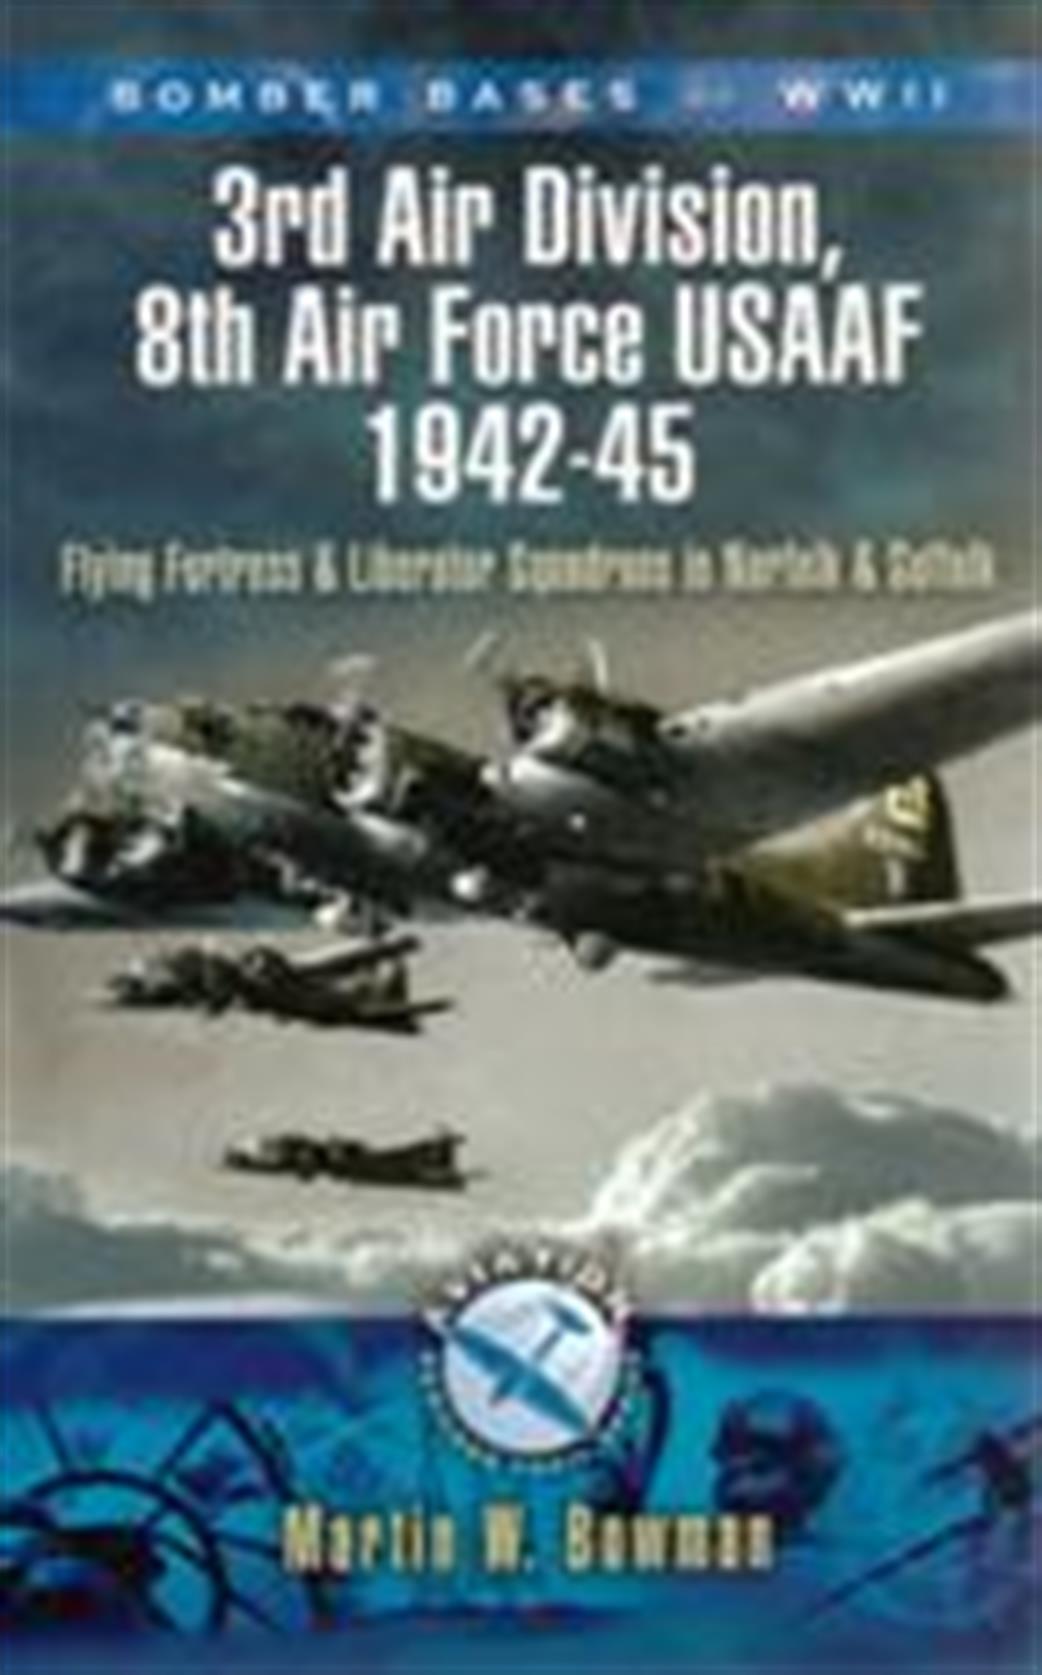 Pen & Sword  9781844158287 3rd Air Division 8th Airforce USAAF 1942-45 by Martin W Bowman